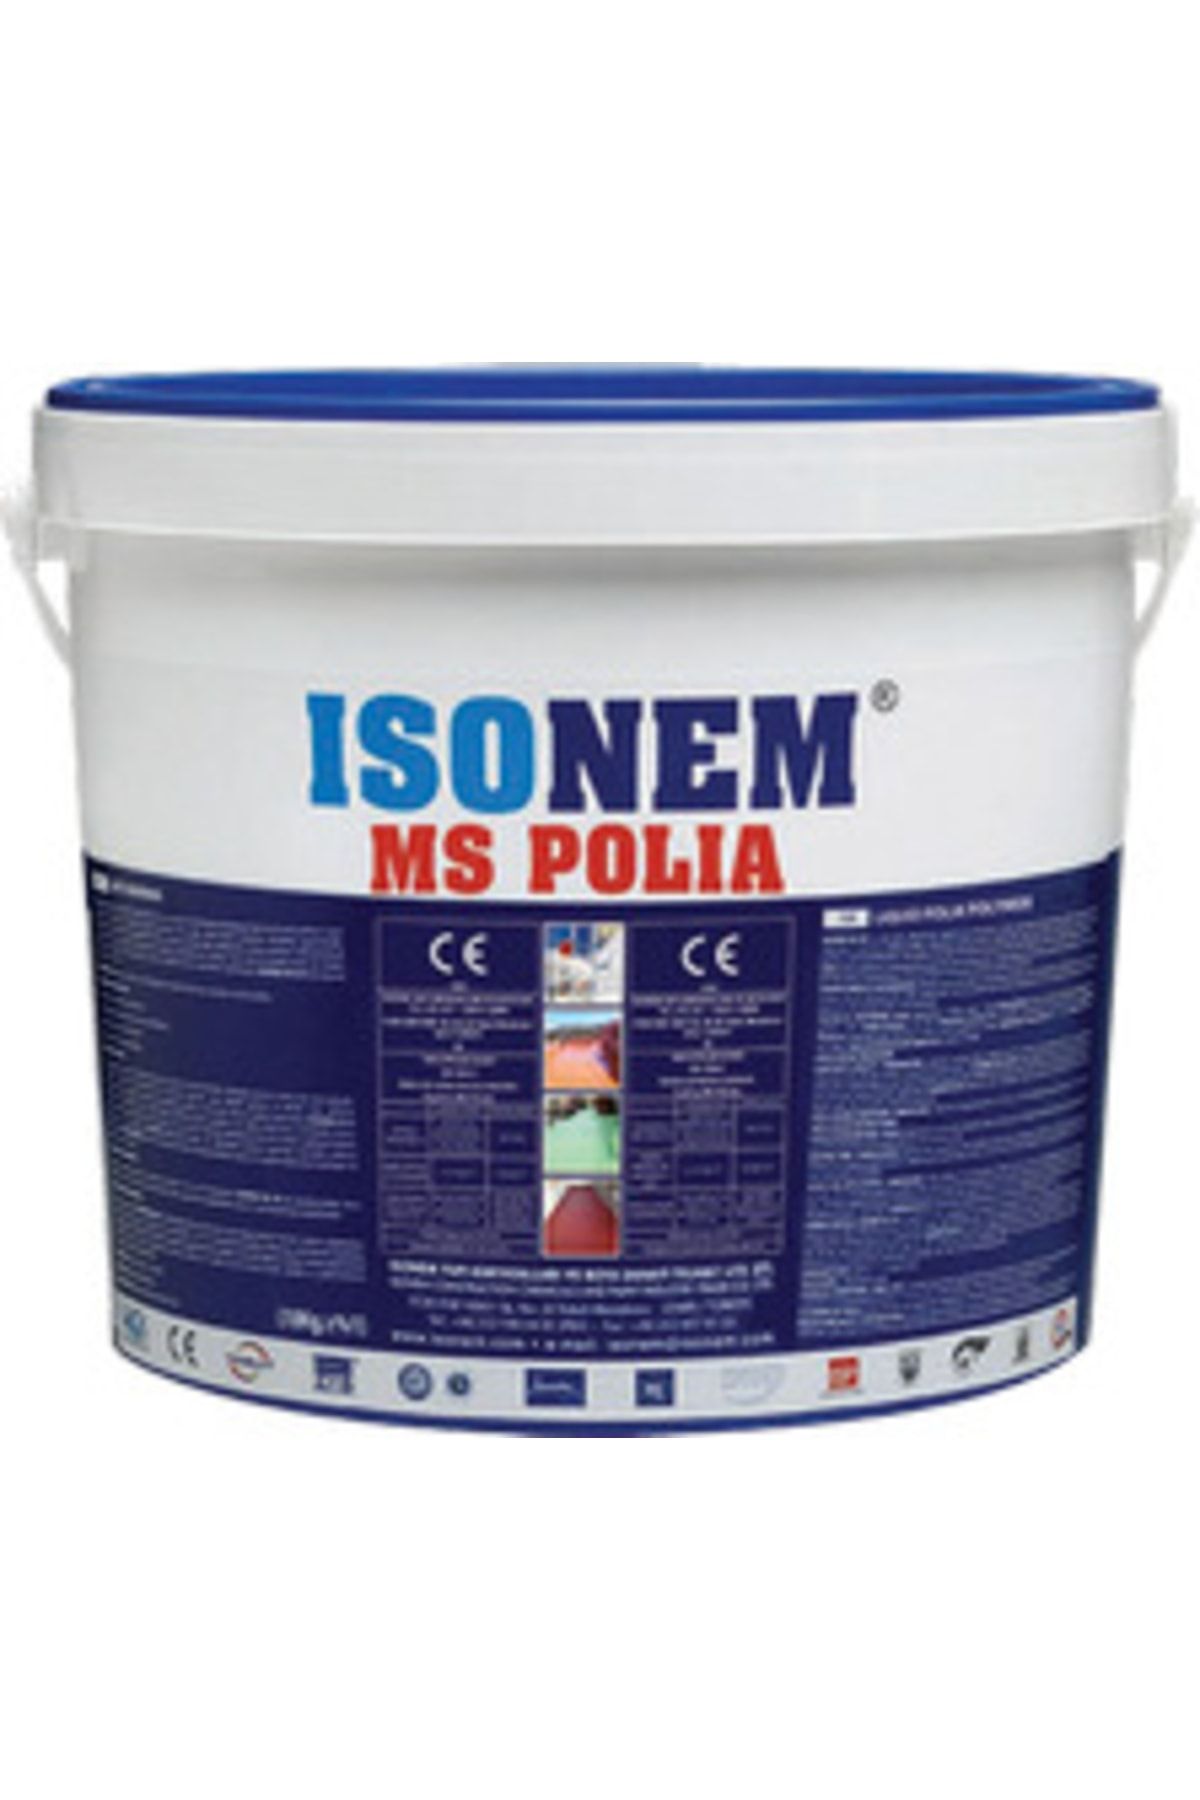 Isonem Ms Polia Likid Polymer Su Yalıtım Boyası 18 kg Beyaz